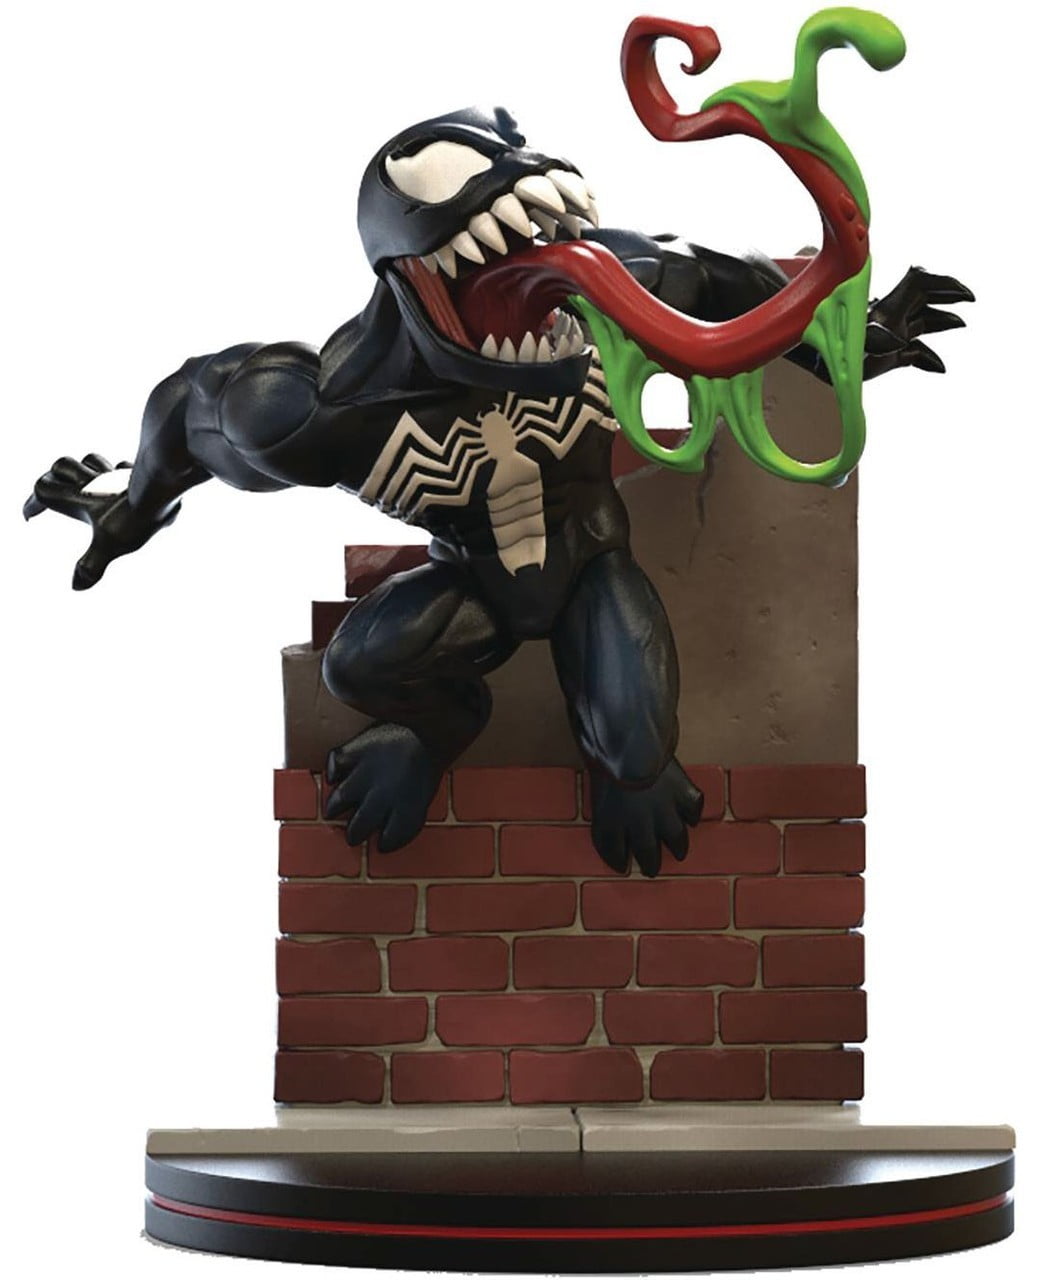 Marvel Venom Q Fig 4 75 Inch Everstone Collectible Diorama Figure Walmart Com Walmart Com